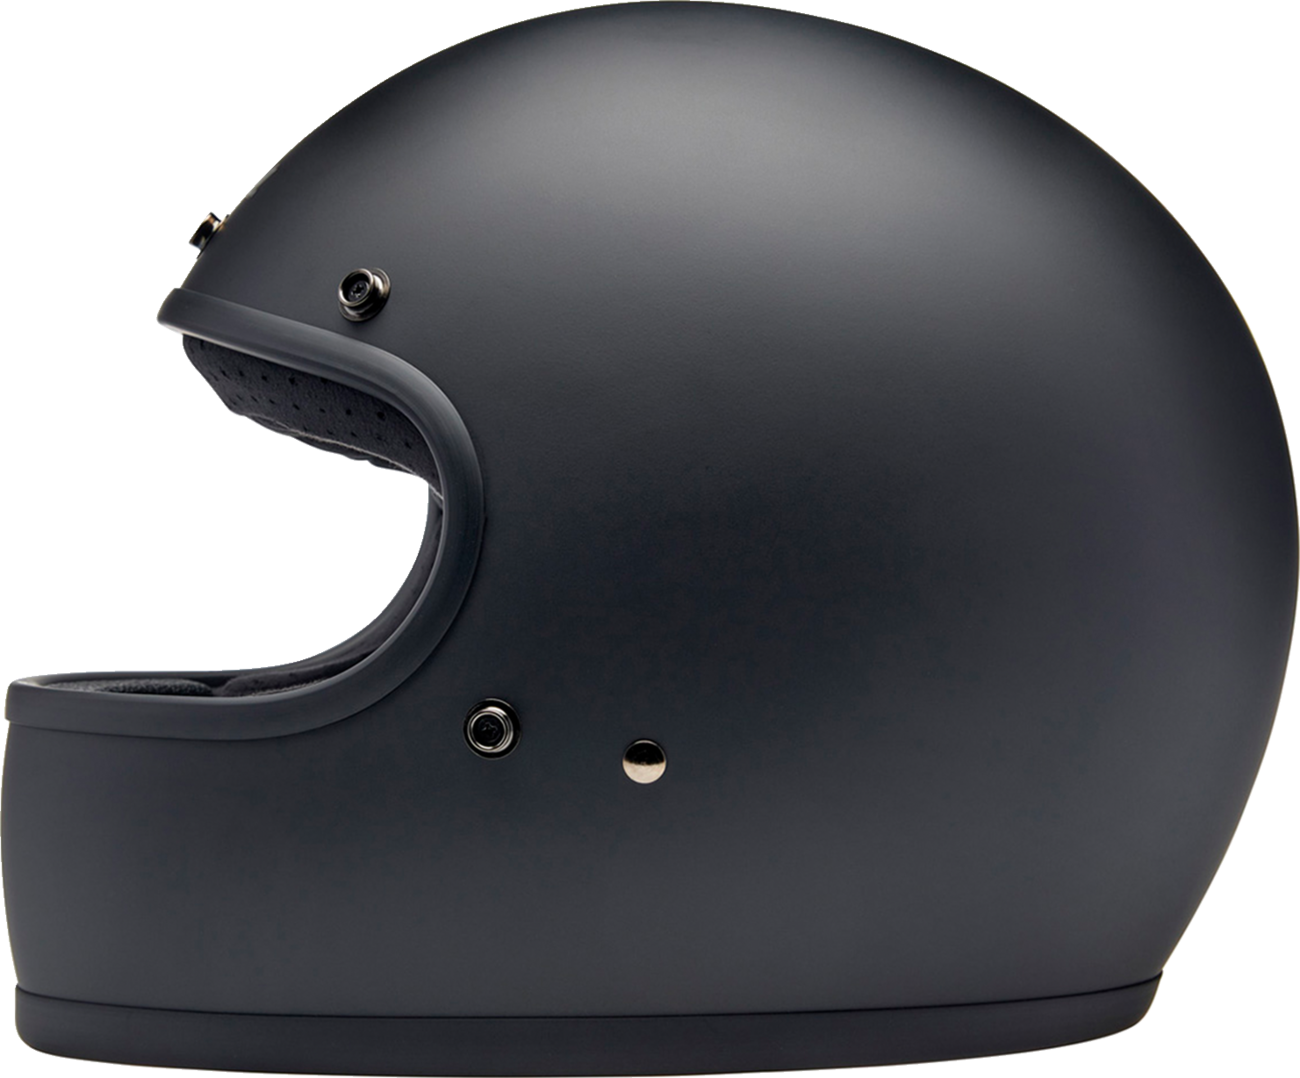 BILTWELL Gringo Helmet - Flat Black - Medium 1002-201-503